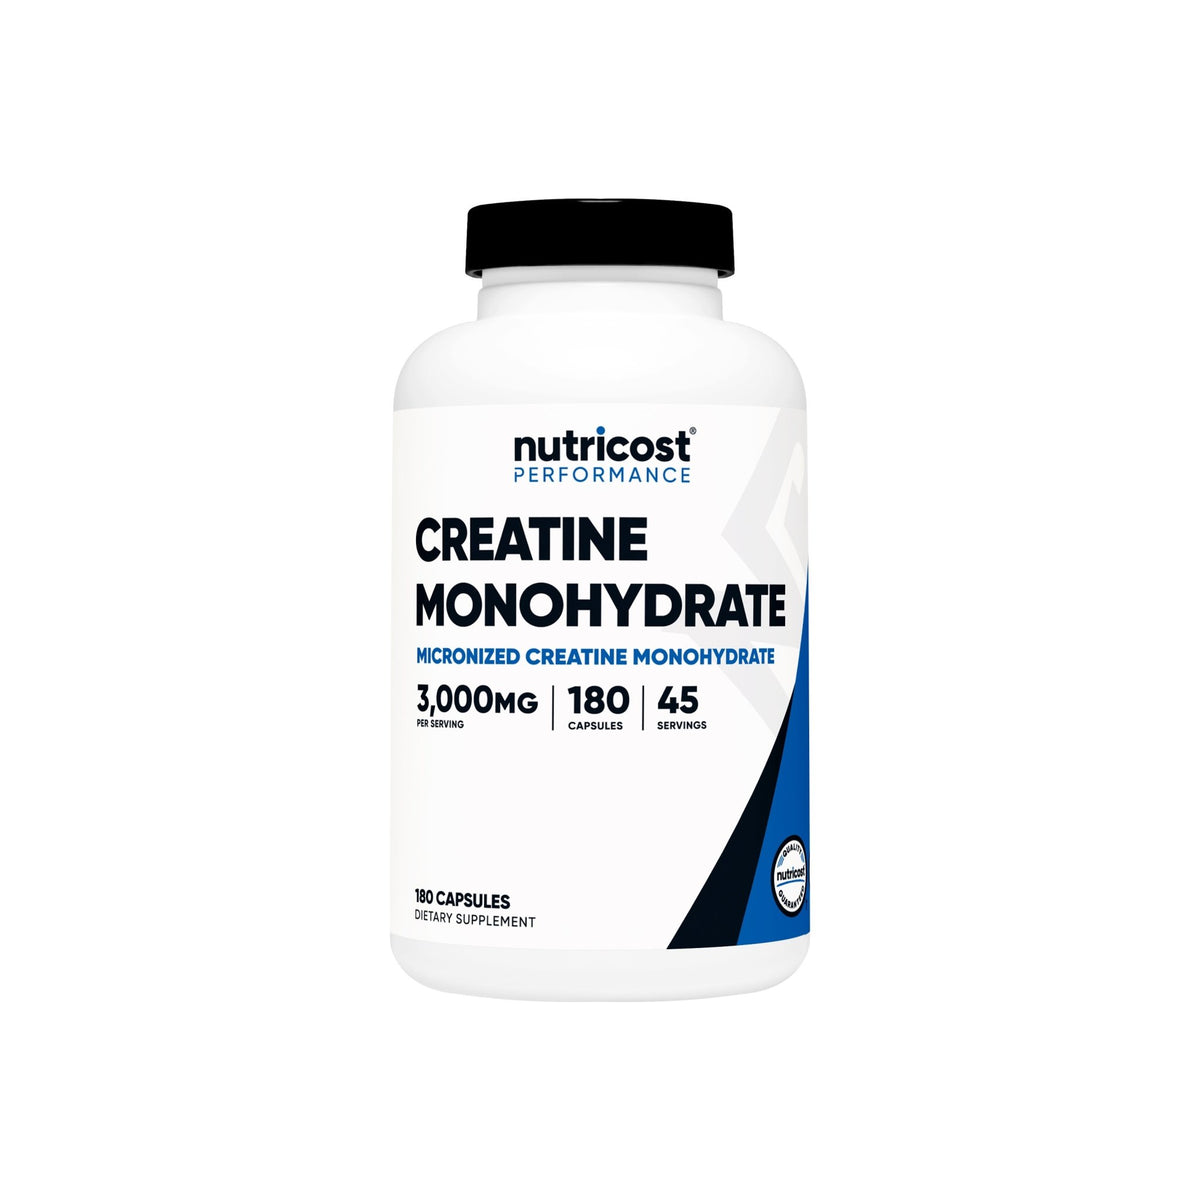 Nutricost Creatine Monohydrate (Creapure ) Powder 500 Grams